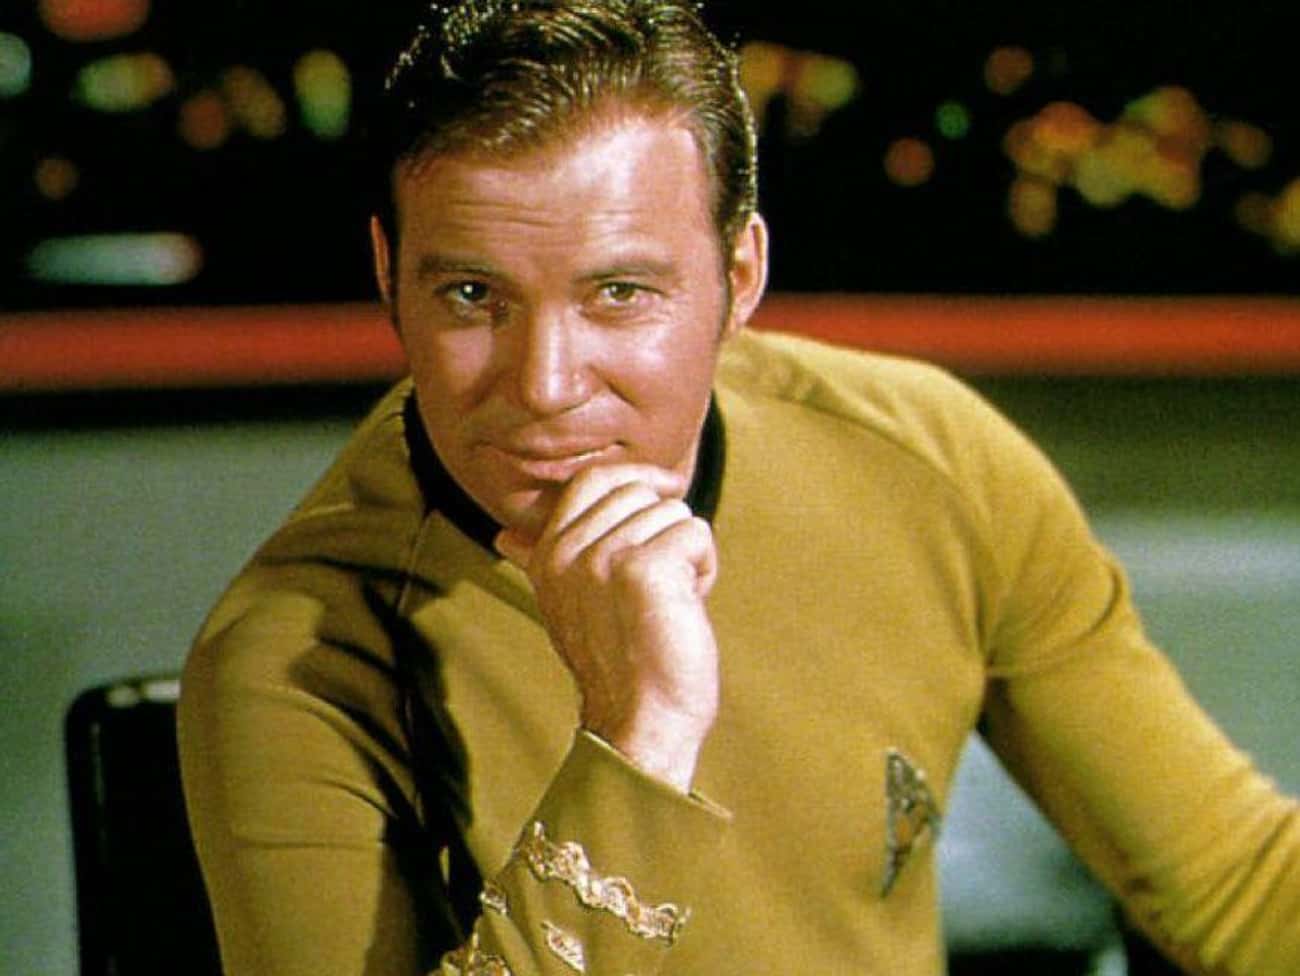 Leo (July 23 - August 22): Captain James T. Kirk